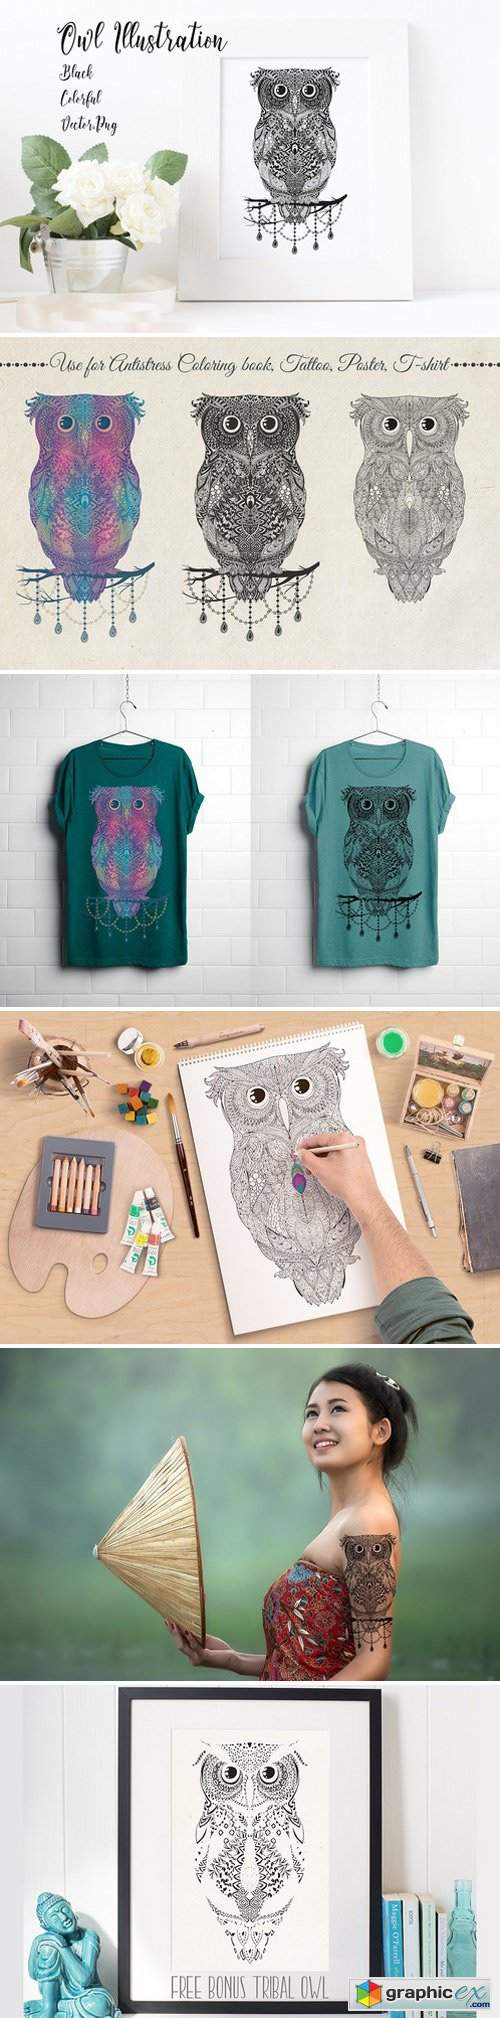 Owl Illustration: Black & Colorful